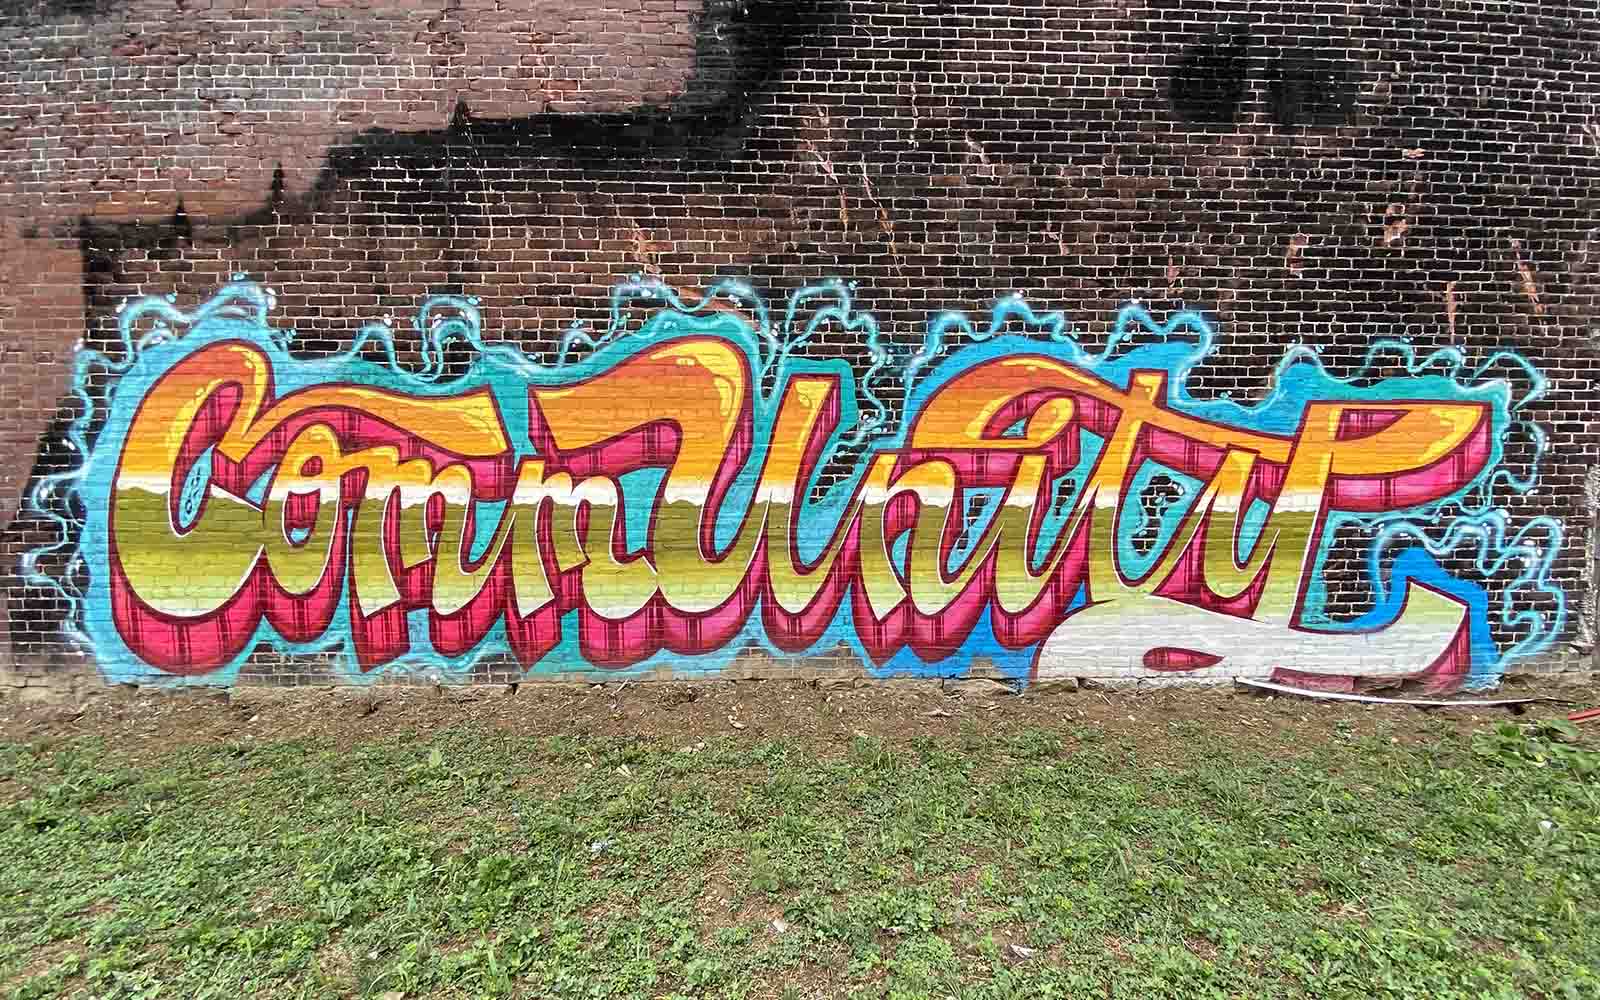 The word "Community" written in graffiti style-writing.